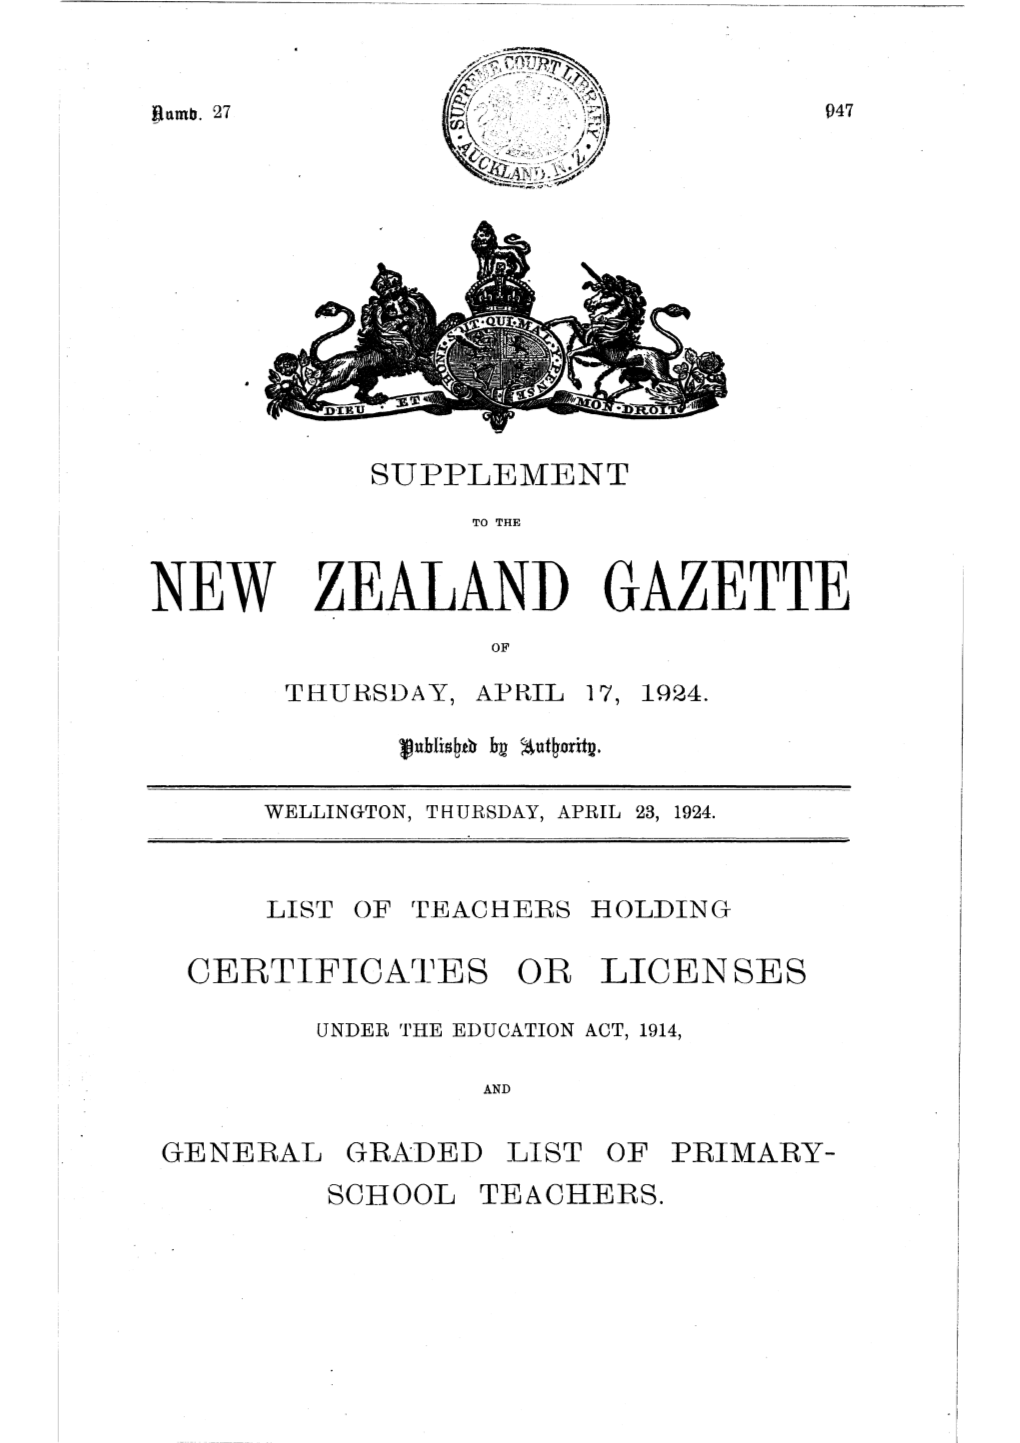 New Zealand Gazette Of